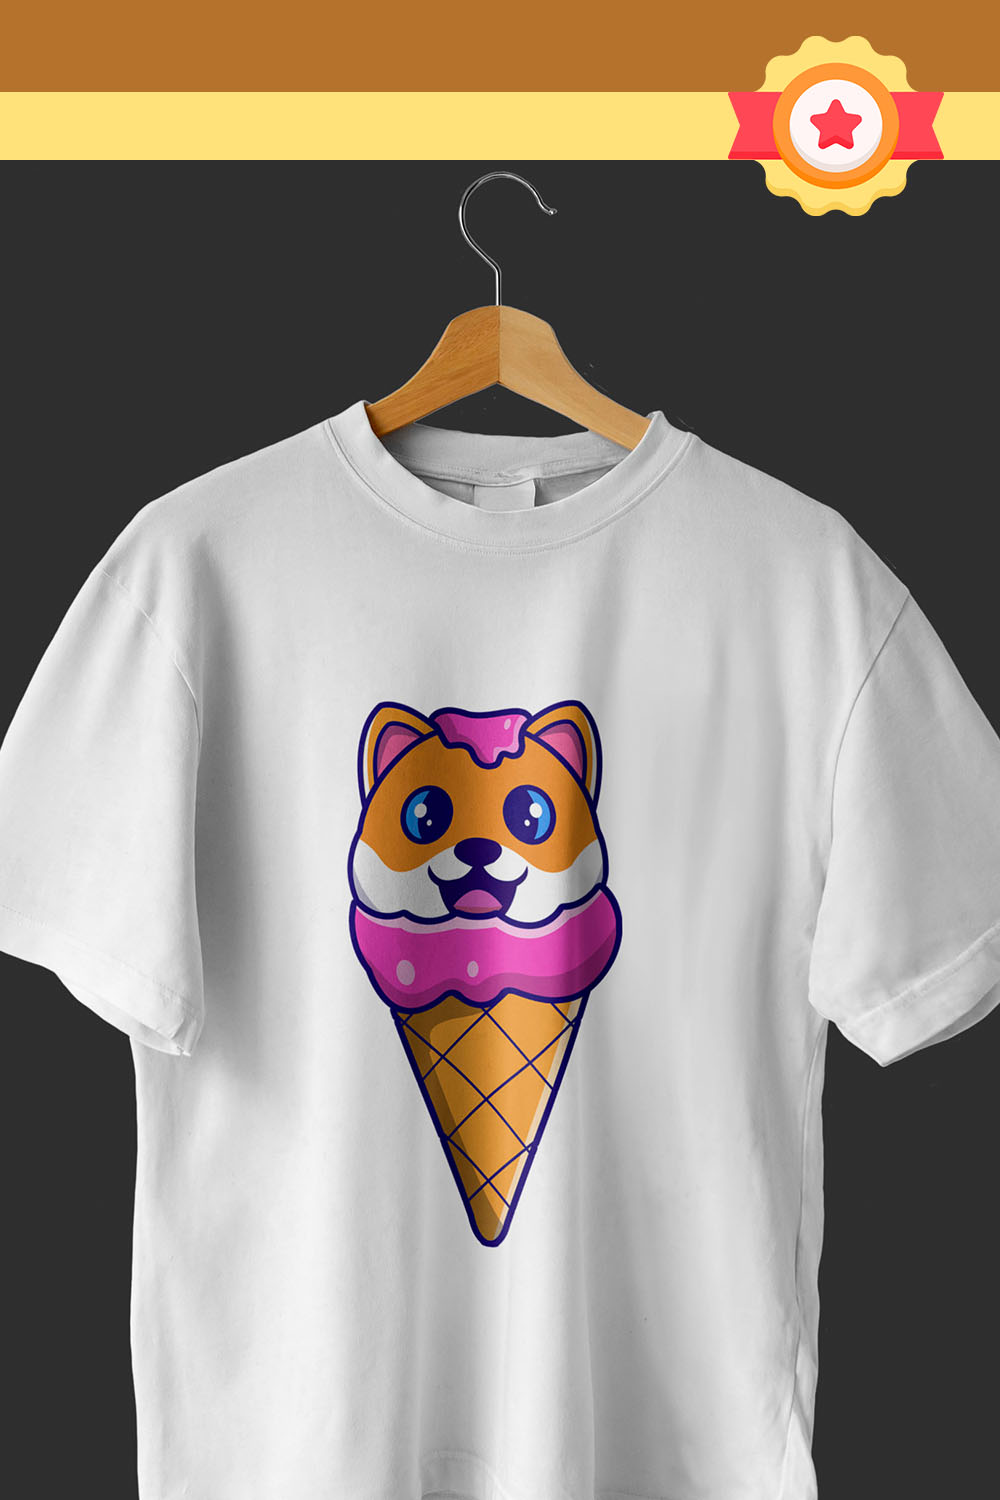 Dog Cute on Ice Cream T-Shirt pinterest image.